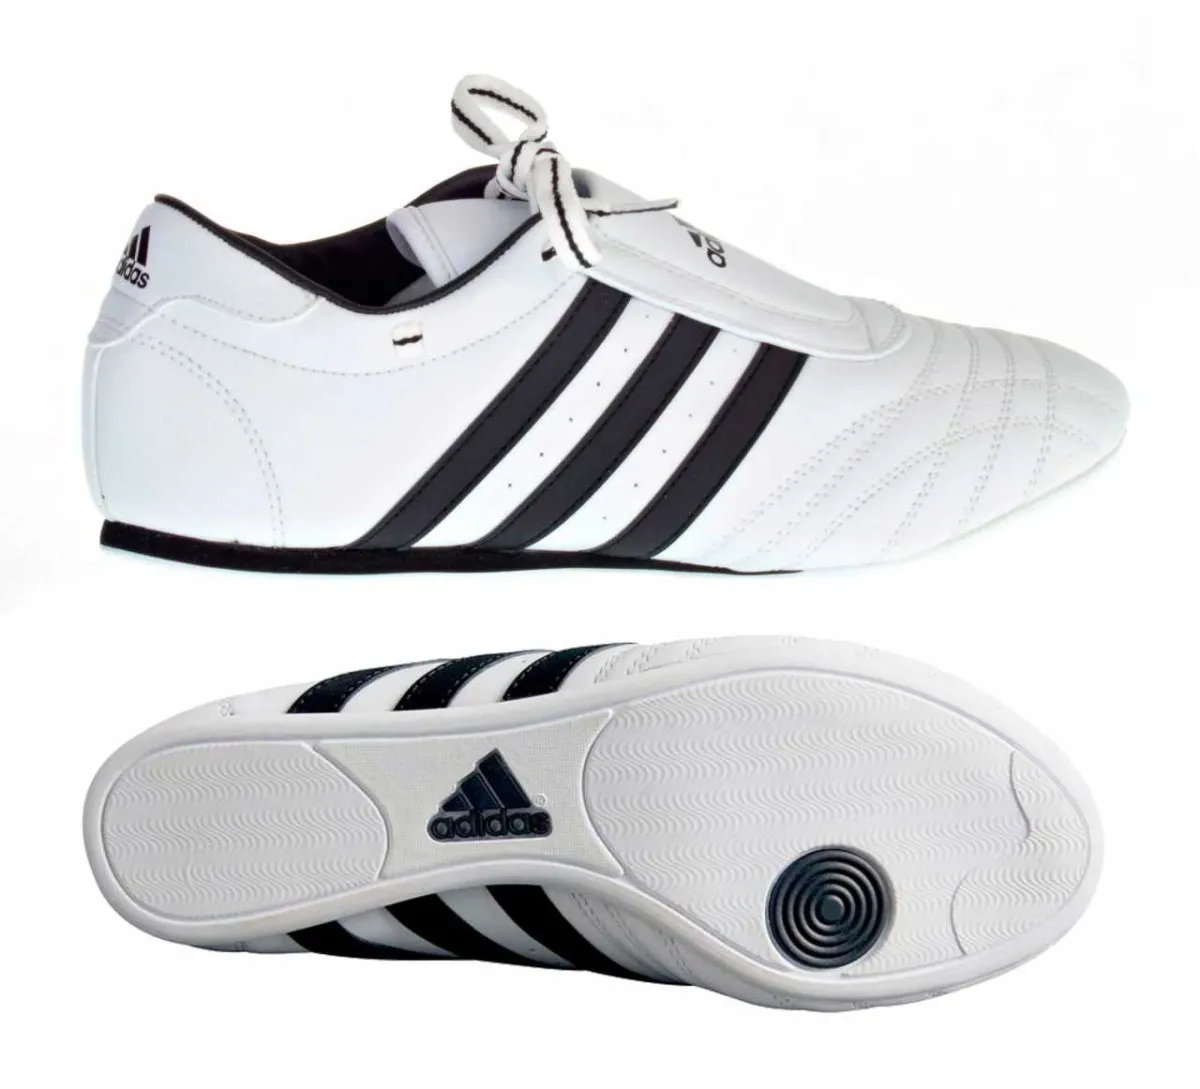 Adidas zapatos SM II blanco